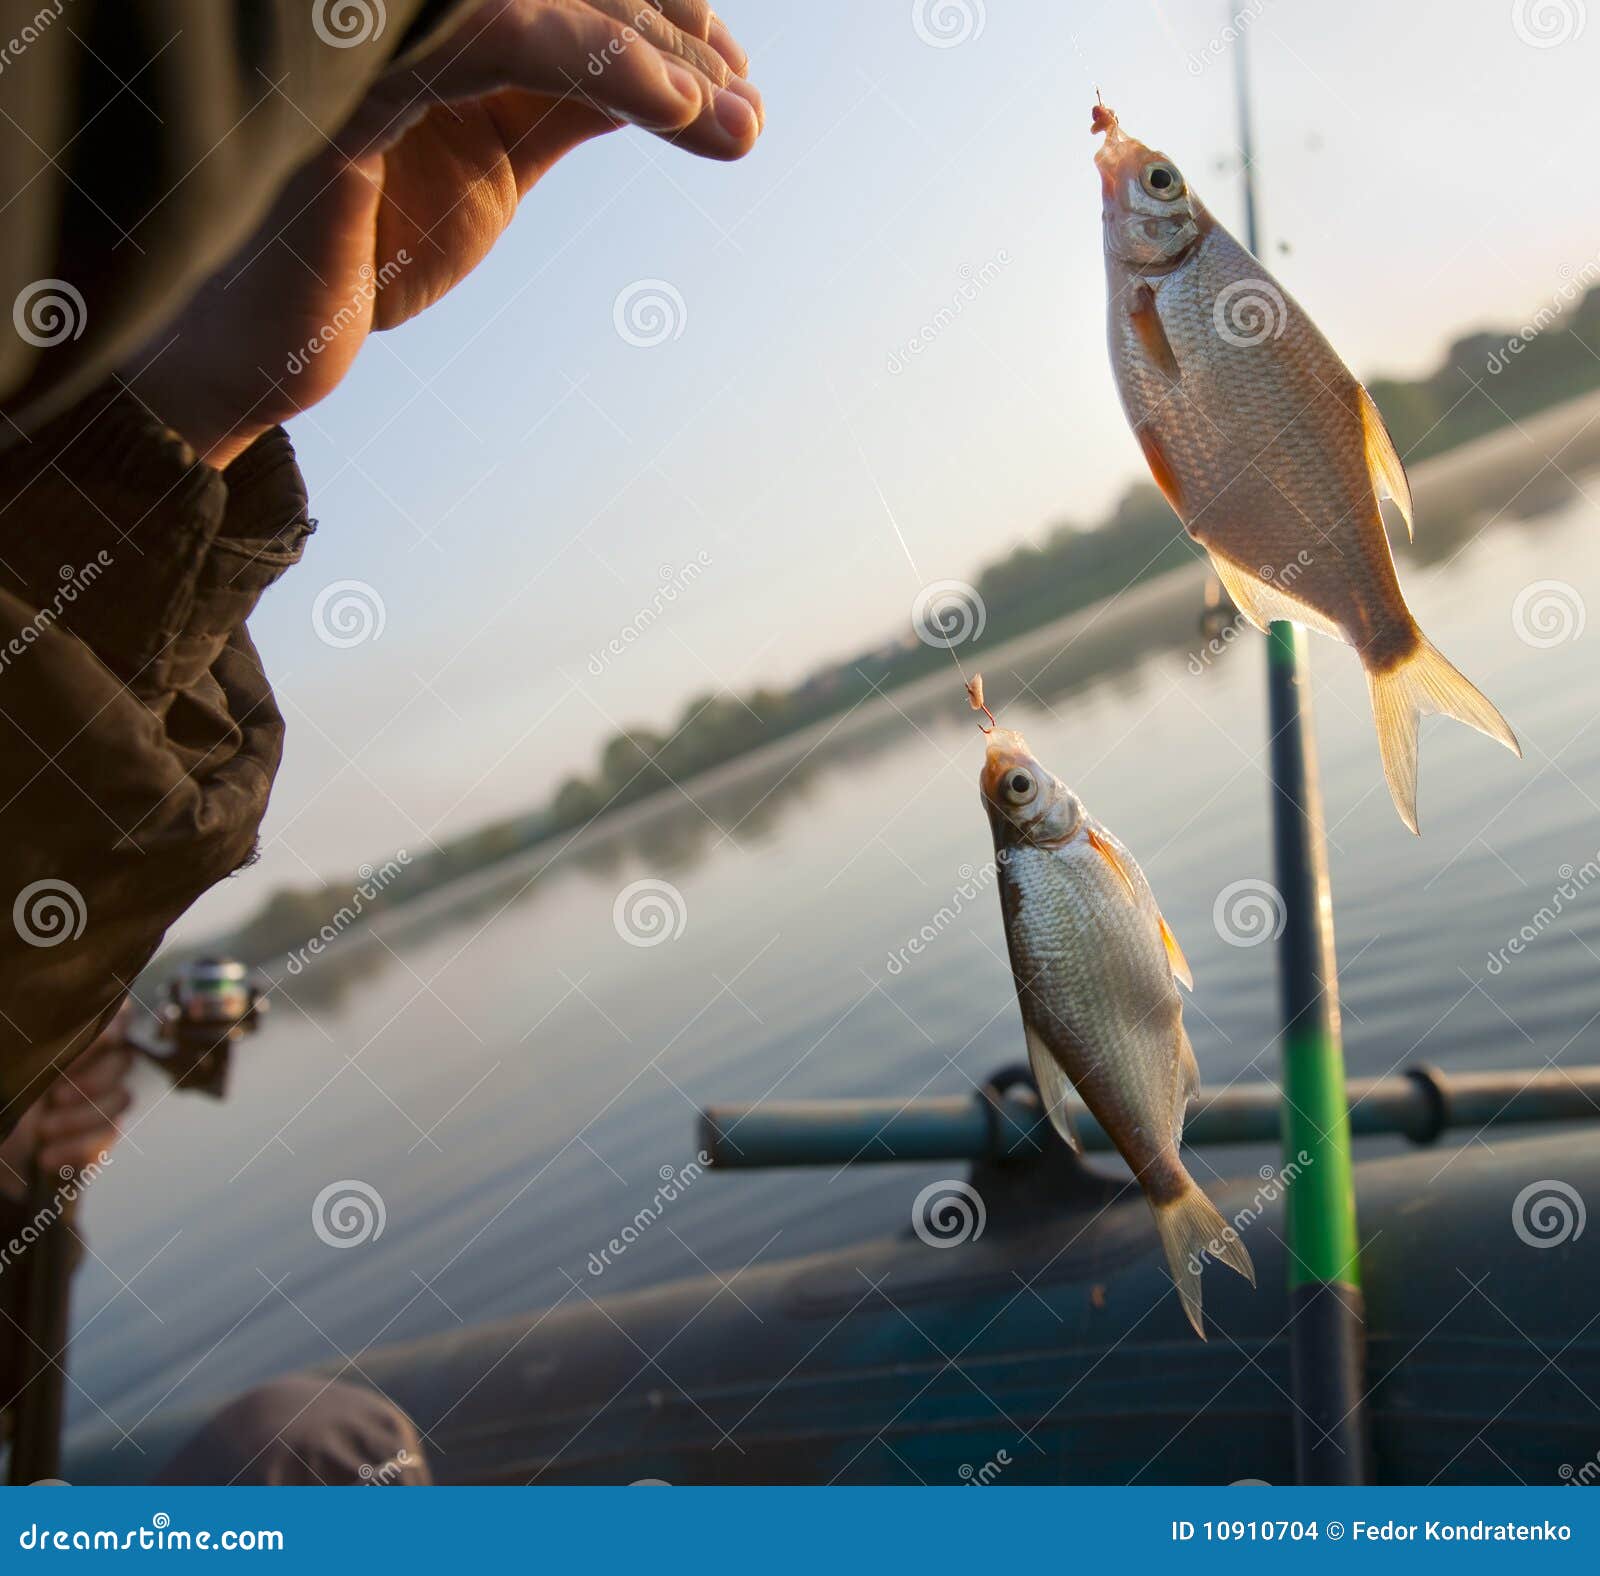 Successful Morning - Fish Bites Good Stock Photo - Image of light